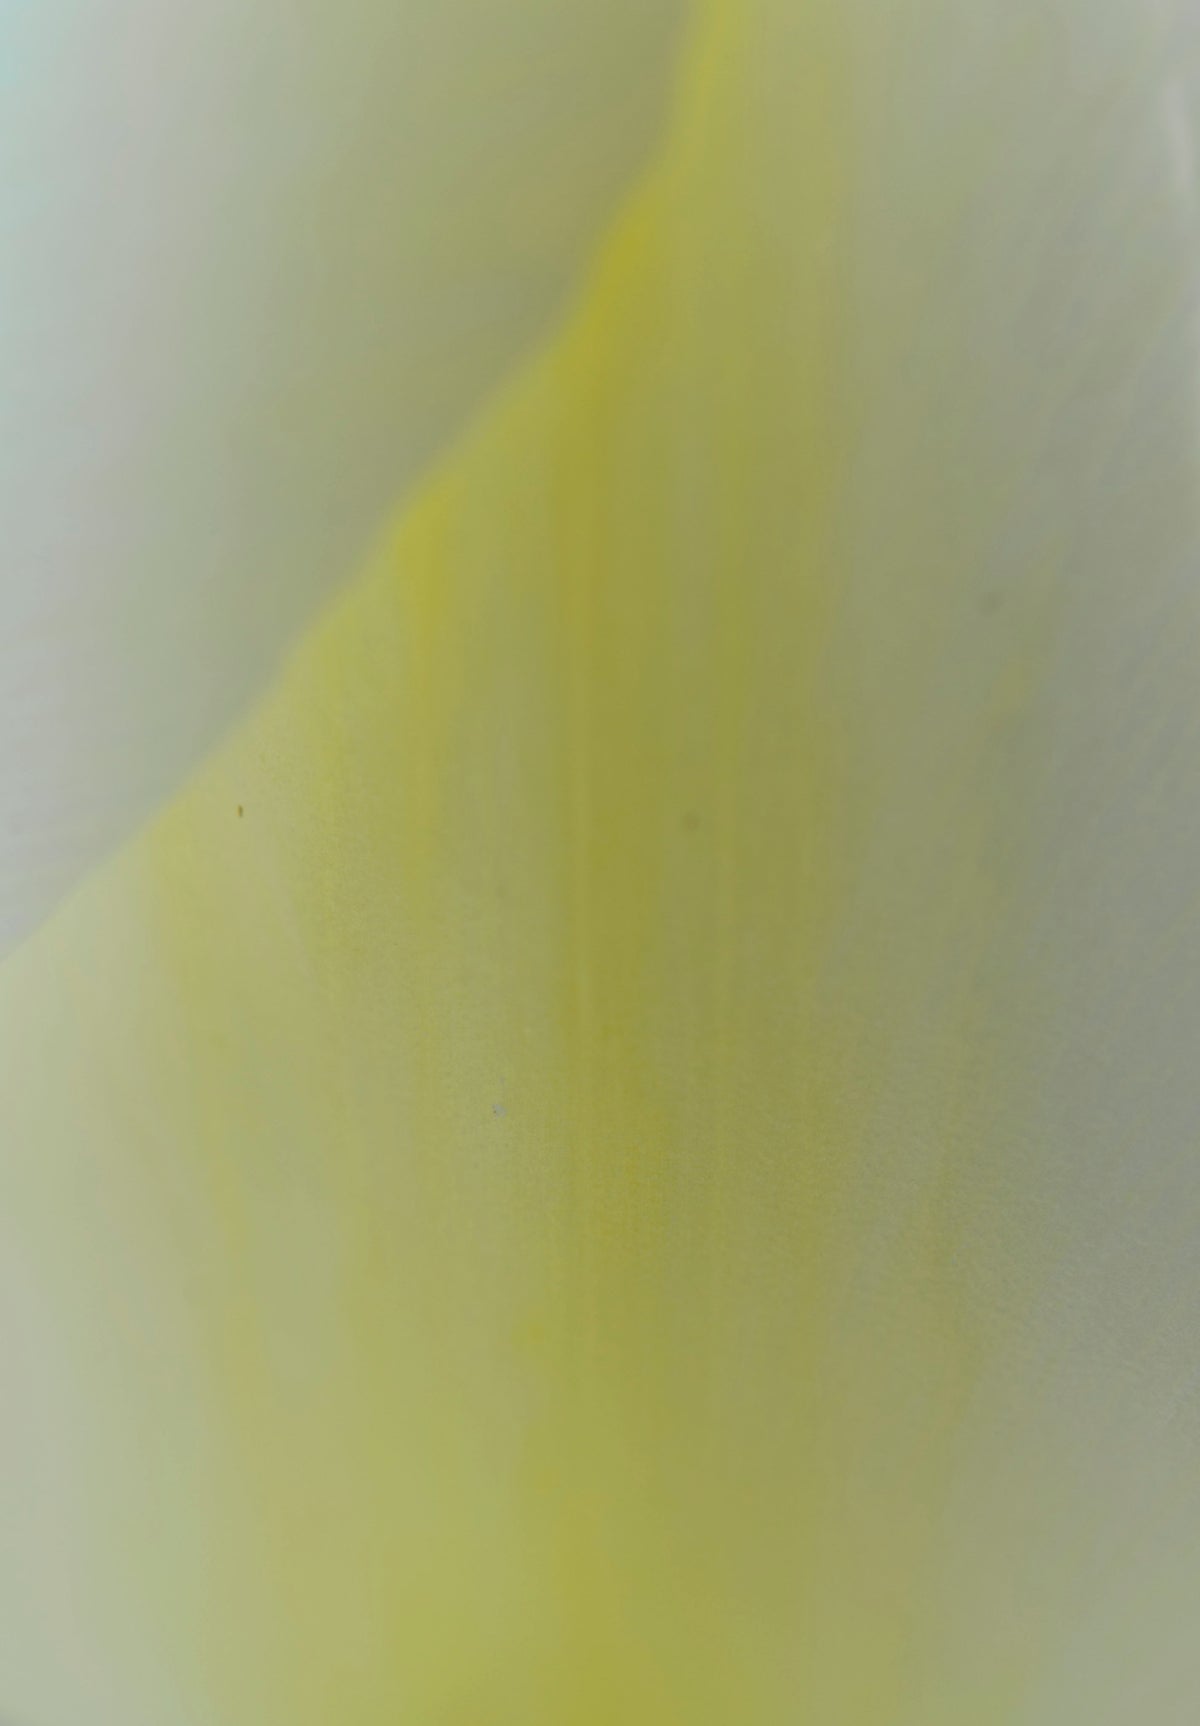 &lt;I&gt;Yellow &amp; White (Tulip)&lt;/I&gt;&lt;br&gt;Mendocino, California, 2014&lt;br&gt;&lt;br&gt;GC0383